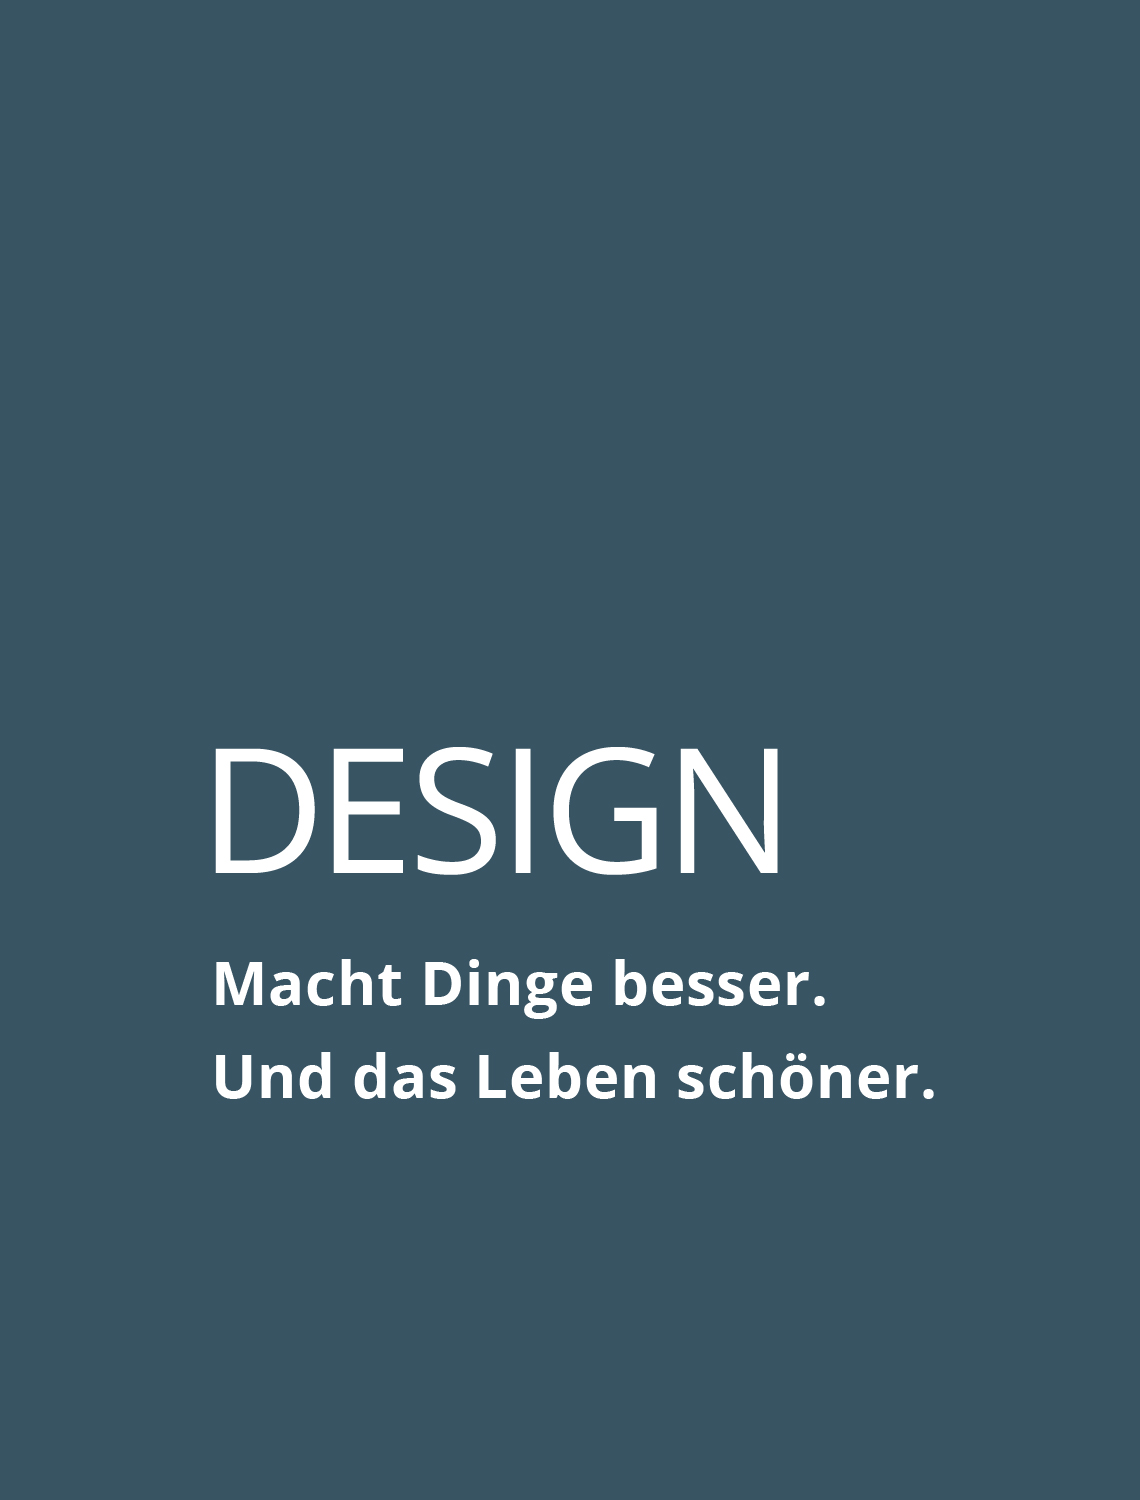 (c) Regel-design.de